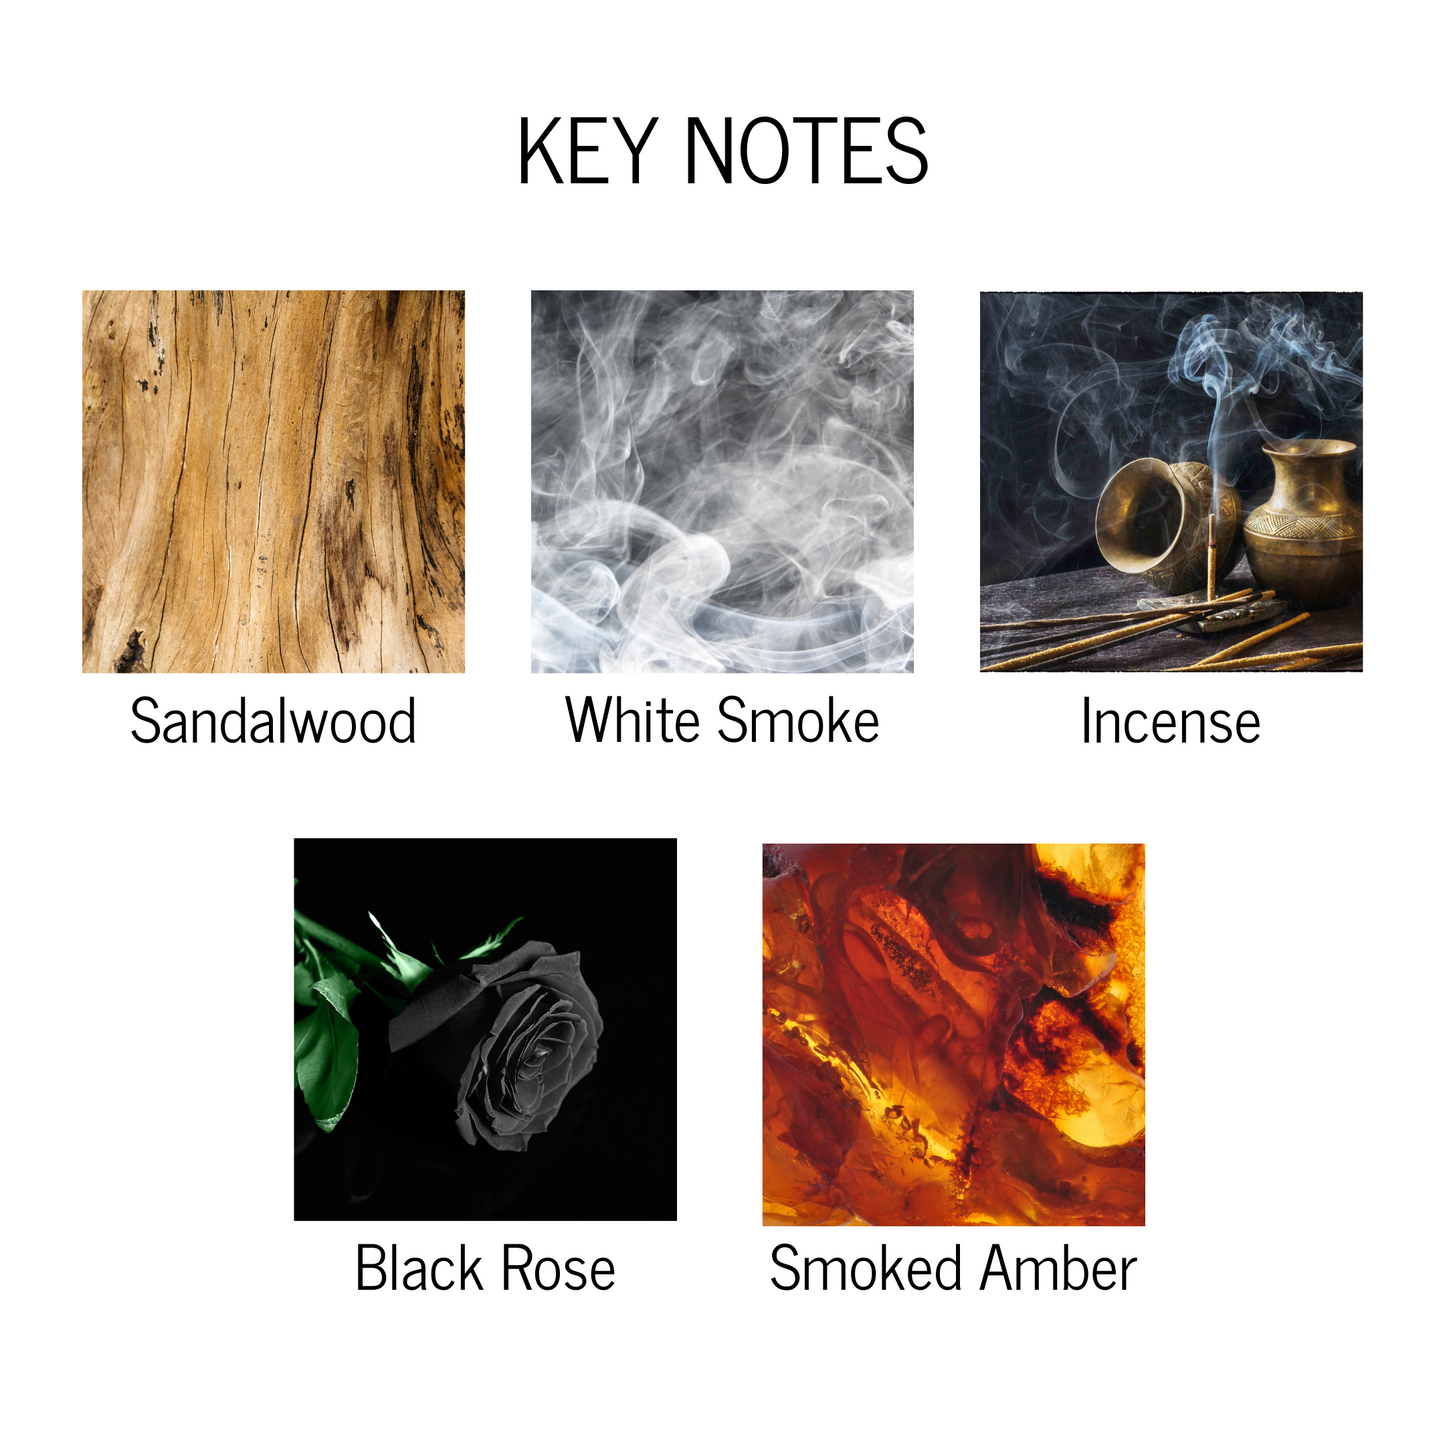 Key notes of sandalwood, white smoke, incense, black rose and smoked amber